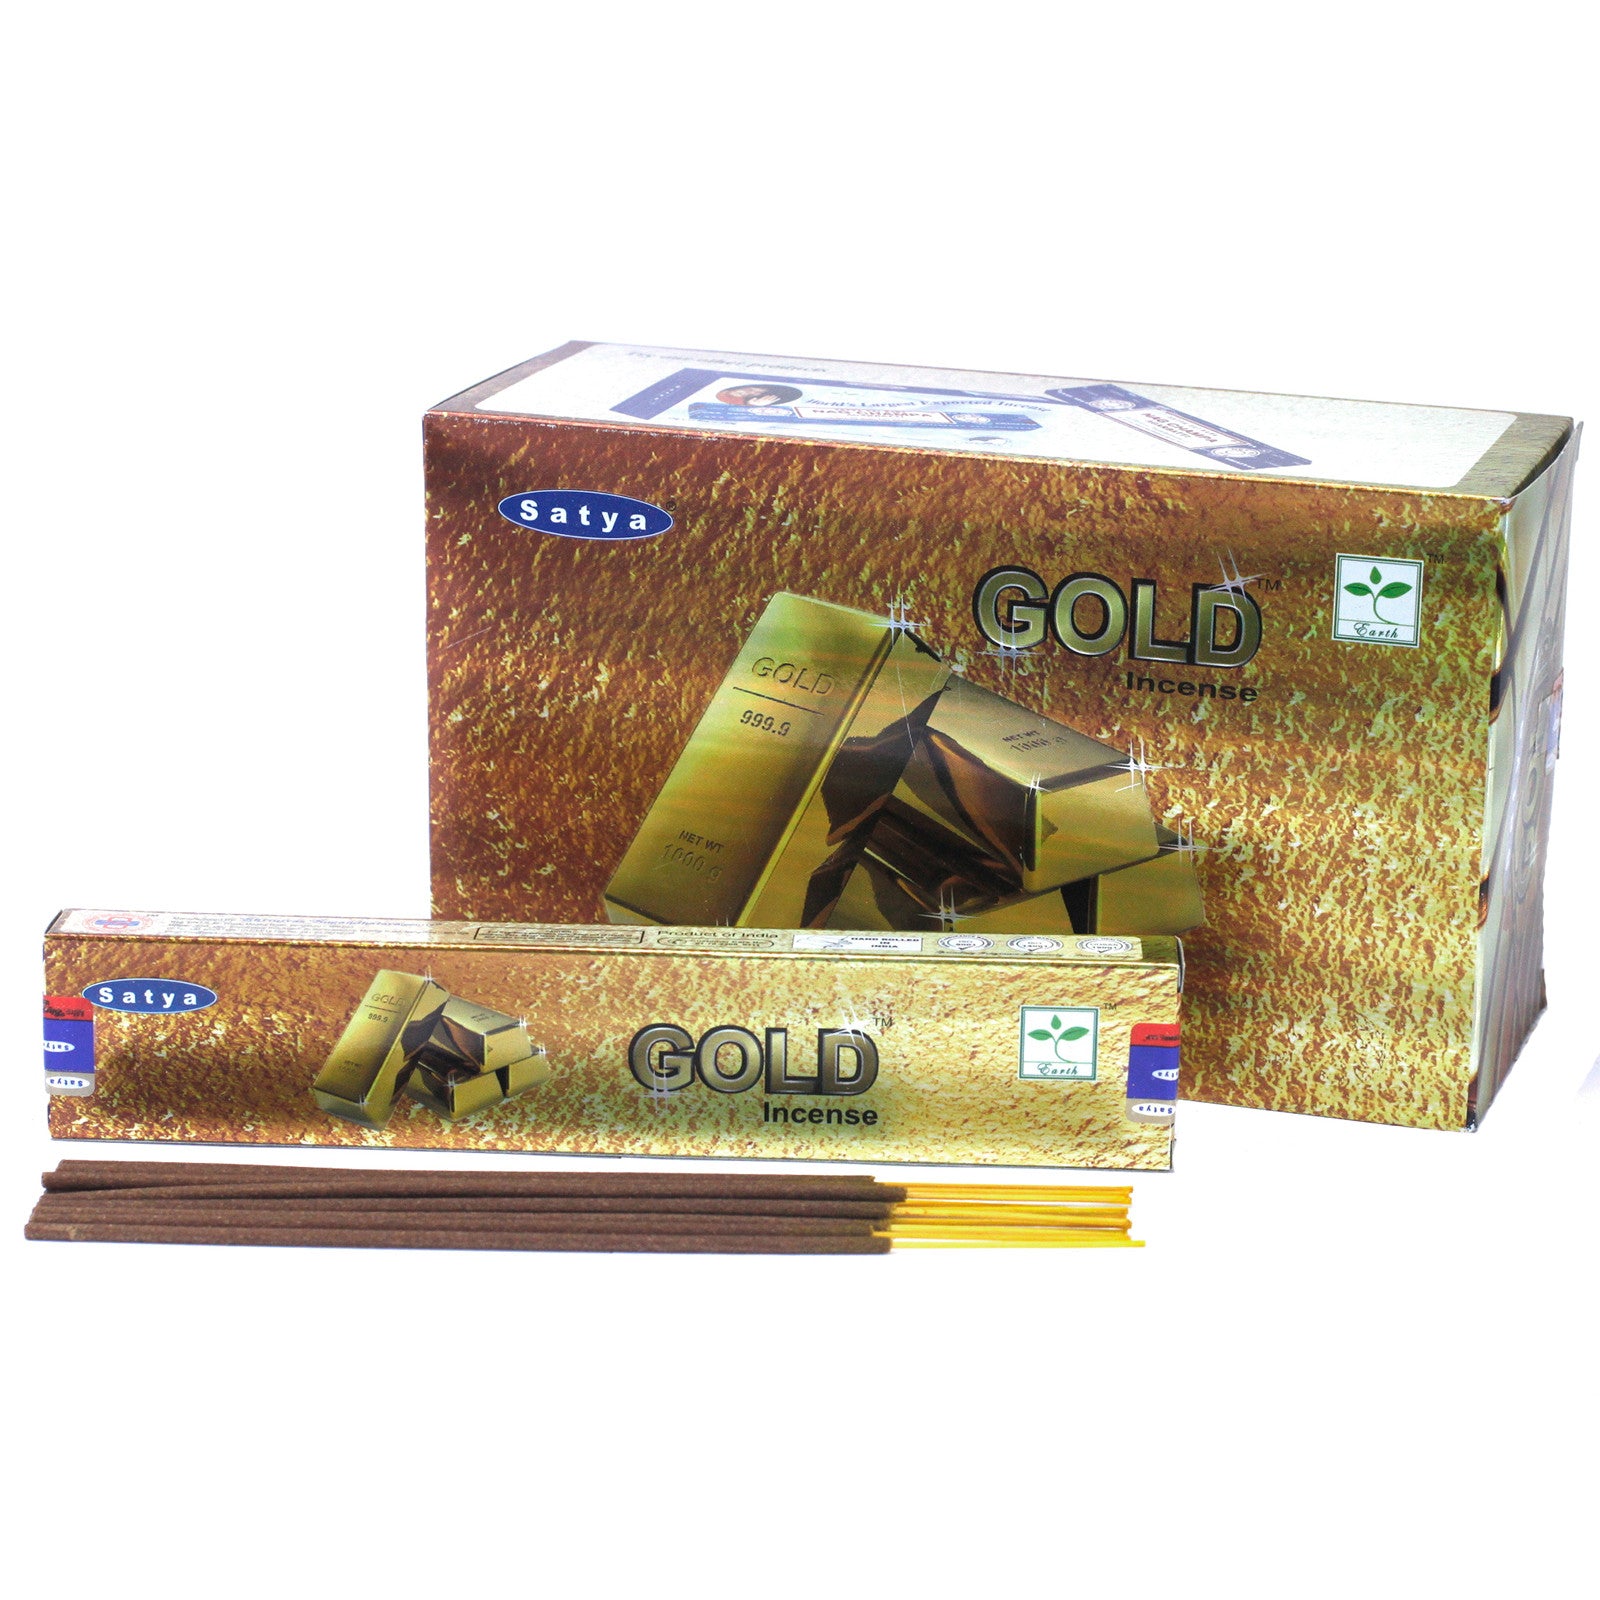 View Satya Incense 15gm Gold information